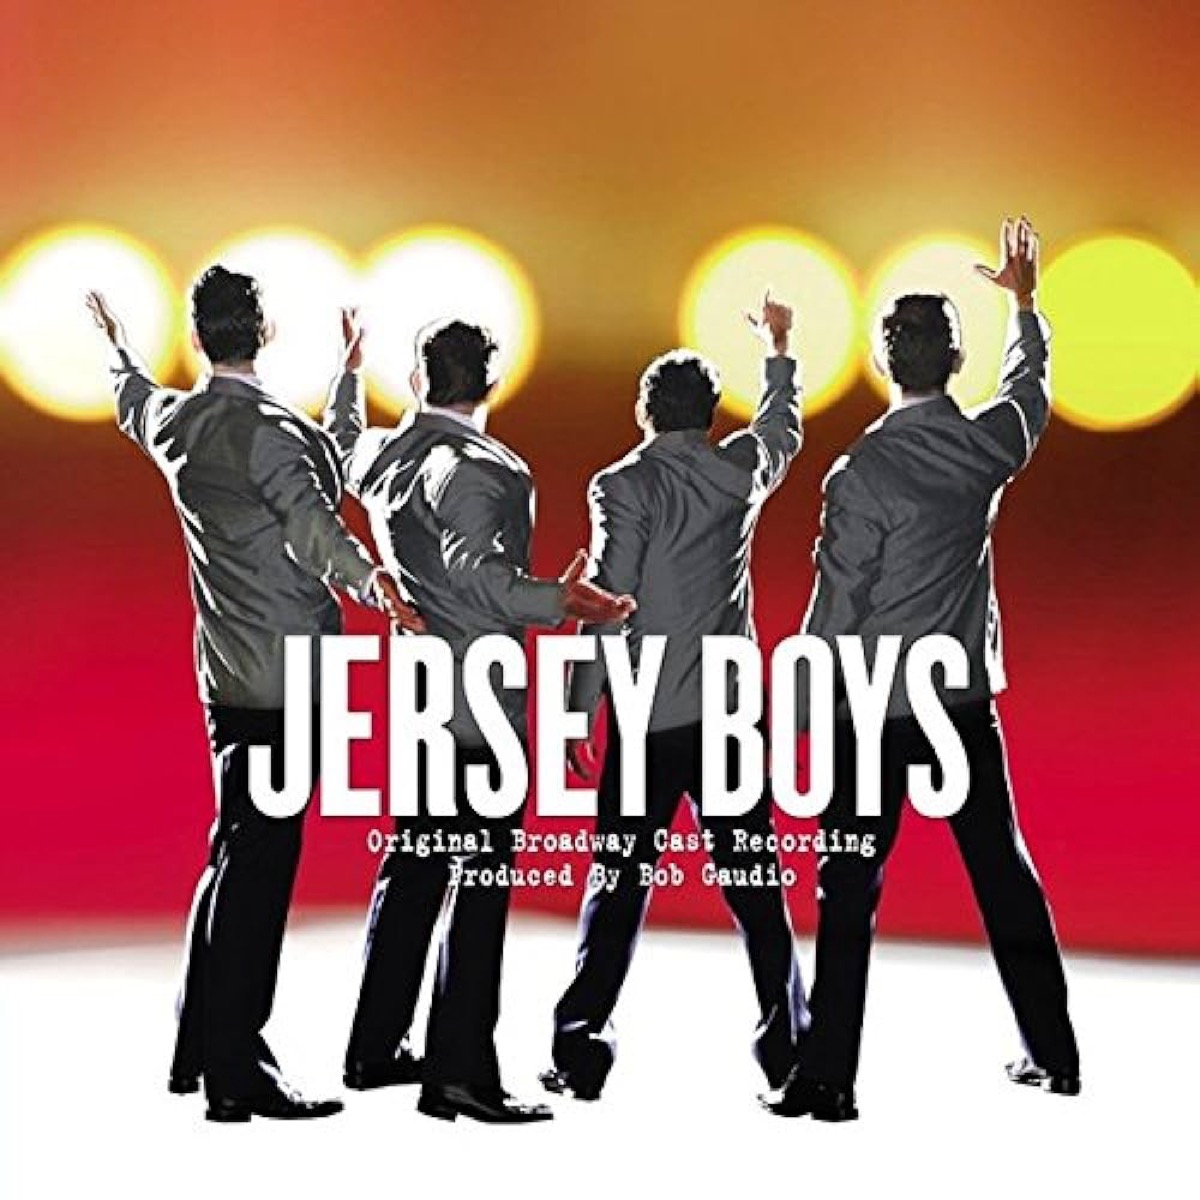 Jersey Boys cast recording